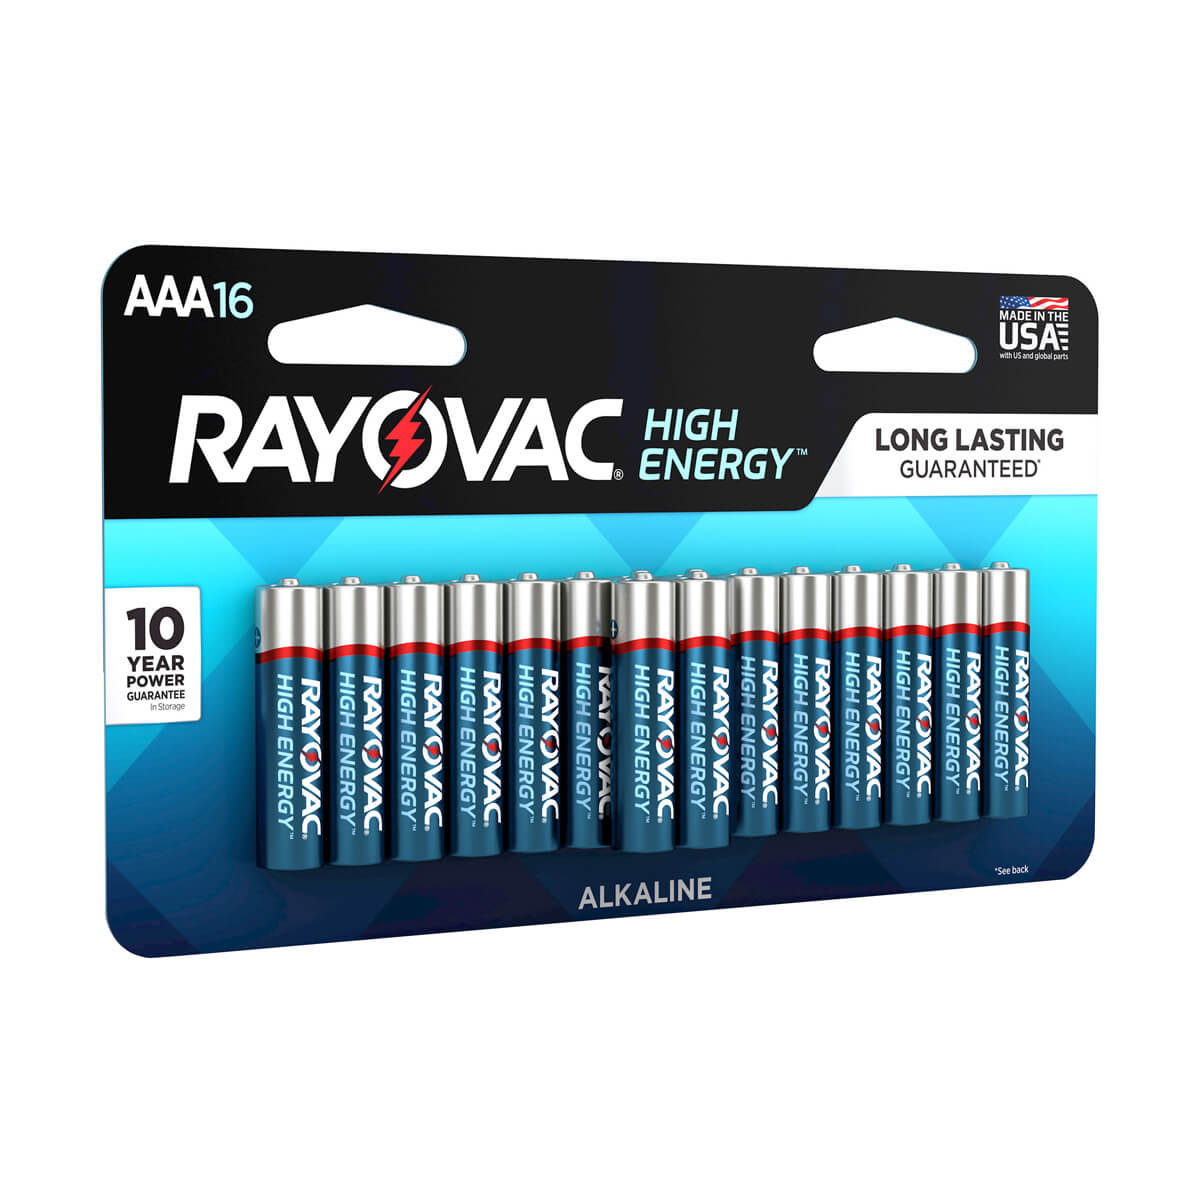 Rayovac HIGH ENERGY™ AAA Alkaline Batteries - 16 pack